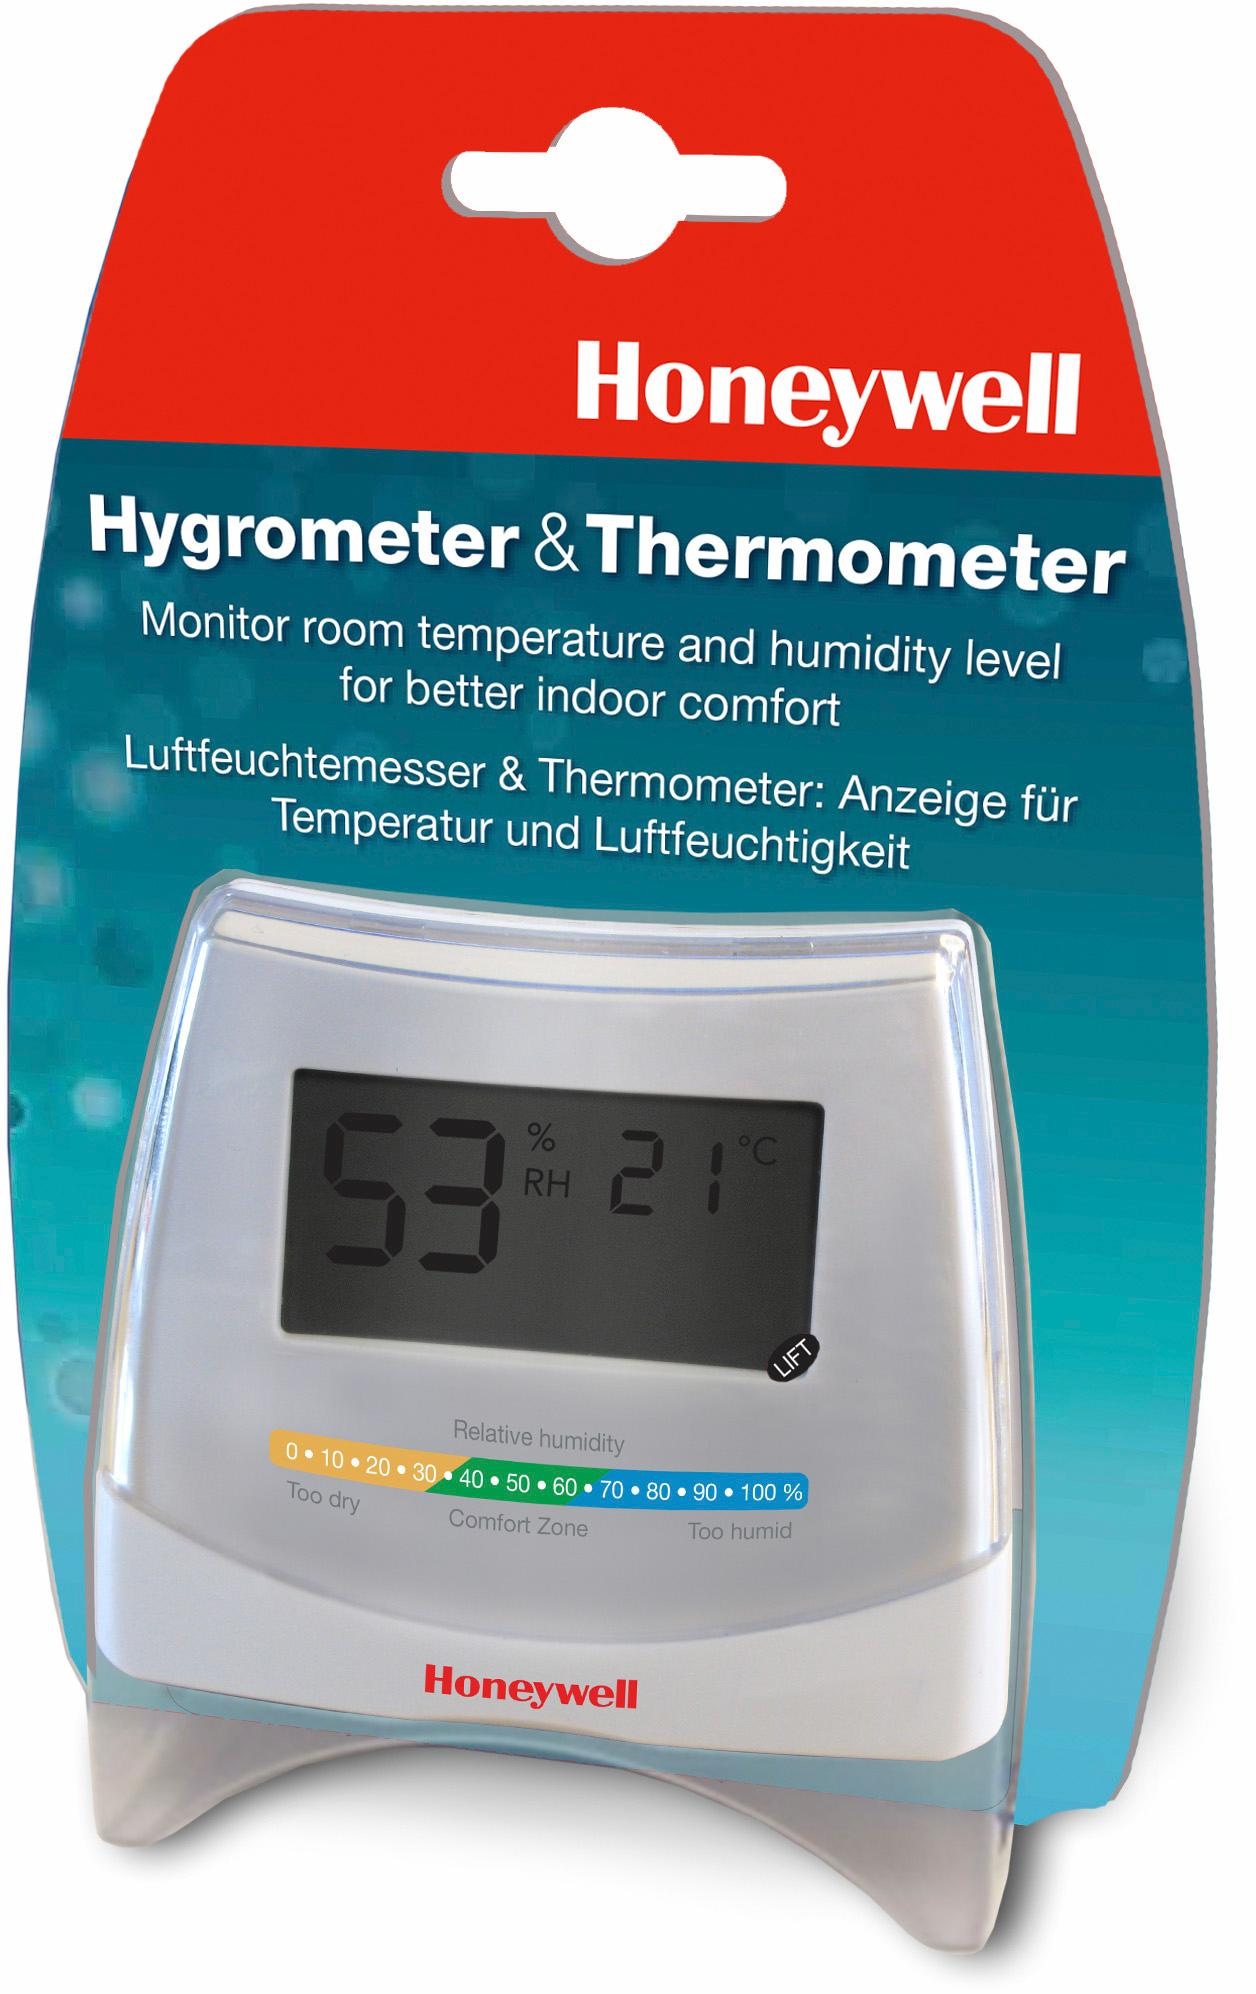 Honeywell Innenwetterstation »2-in-1 Hygrometer und HHY70E« Thermometer à bas prix